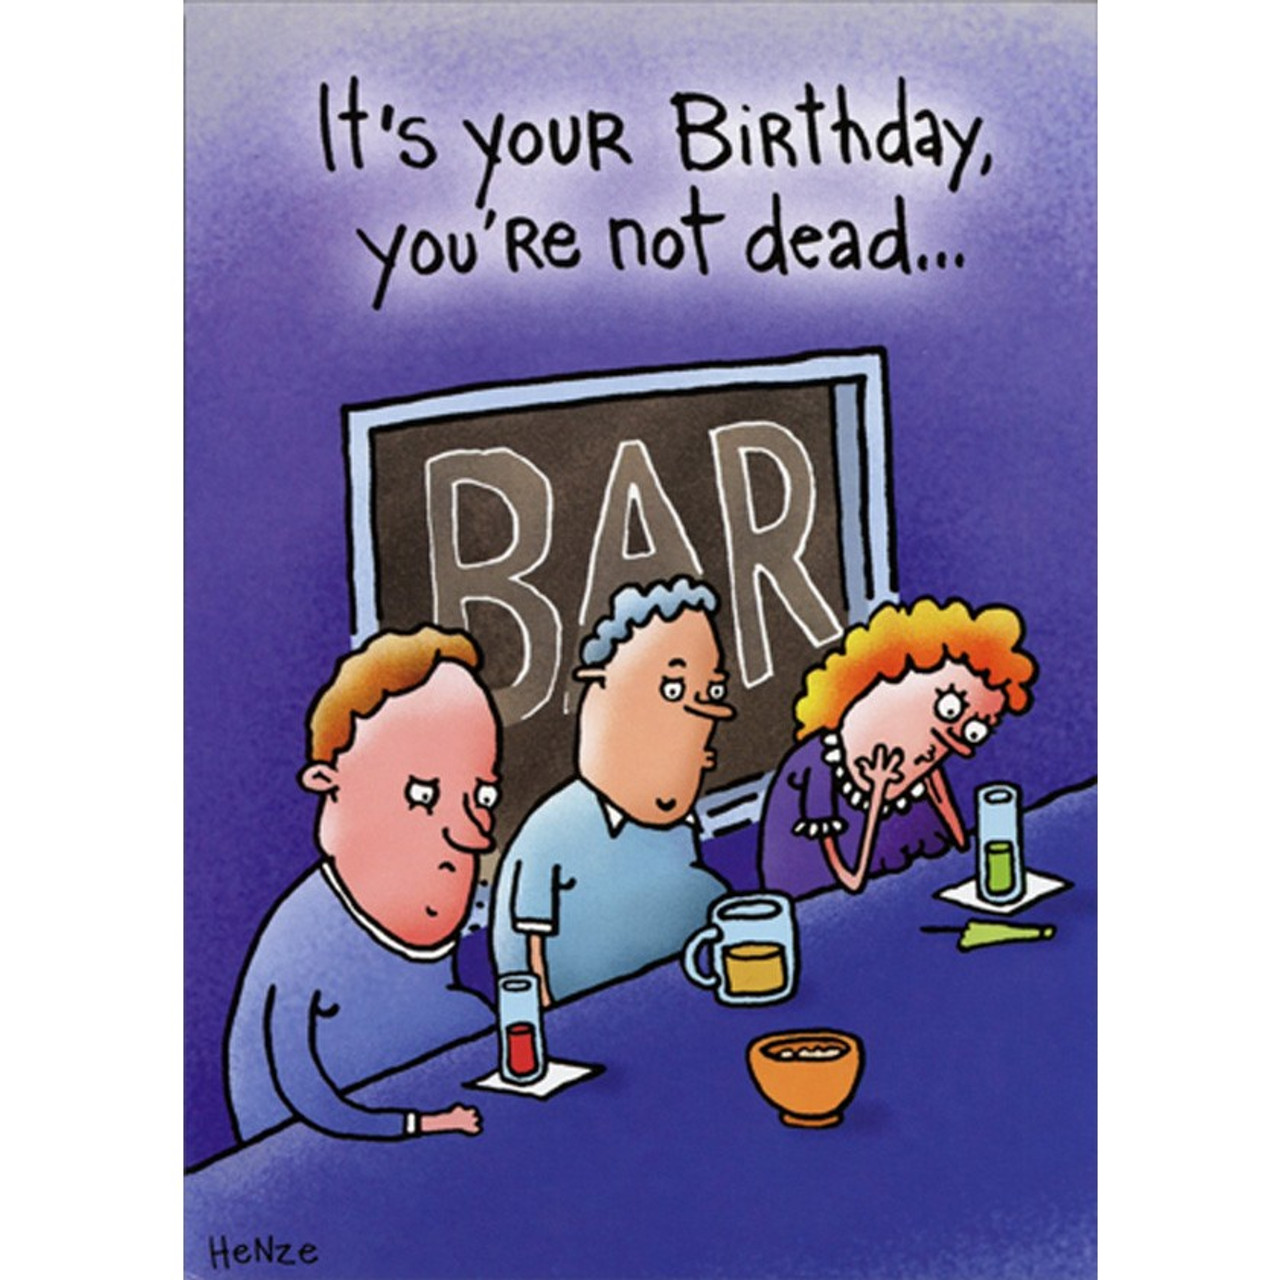 Sad Bart Greeting Card by Theo C